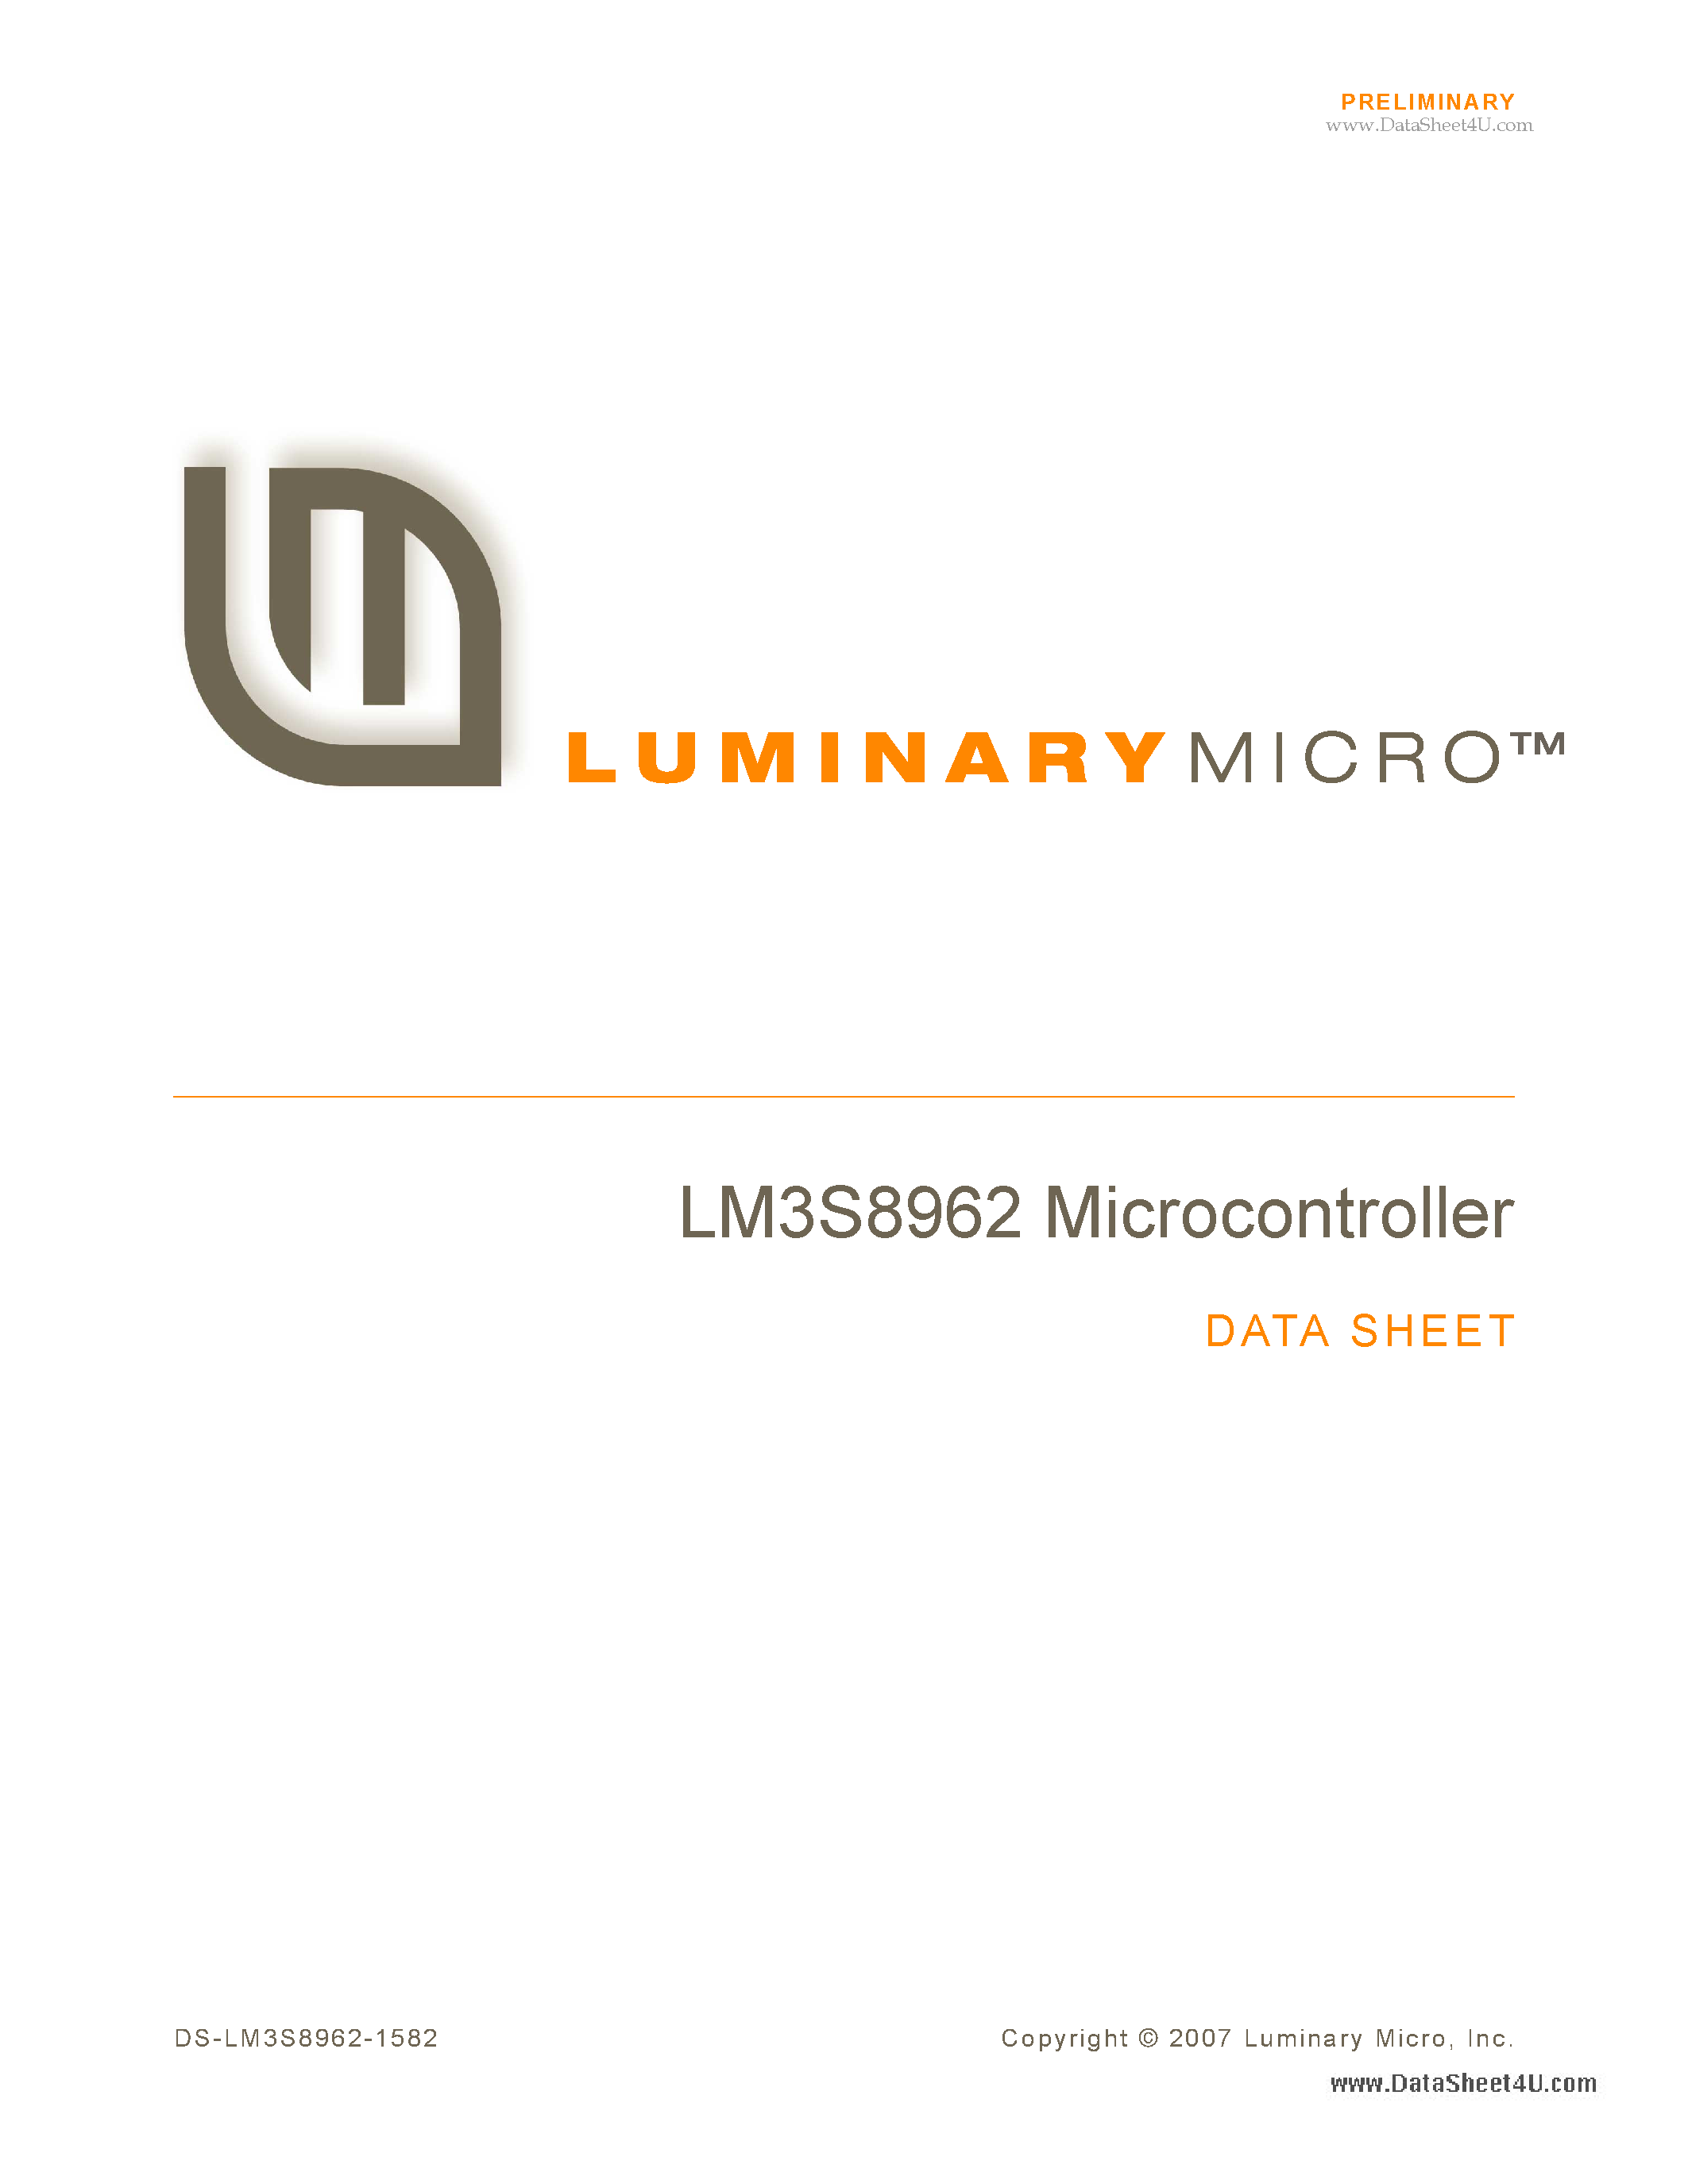 Даташит LM3S8962 - Microcontroller страница 1